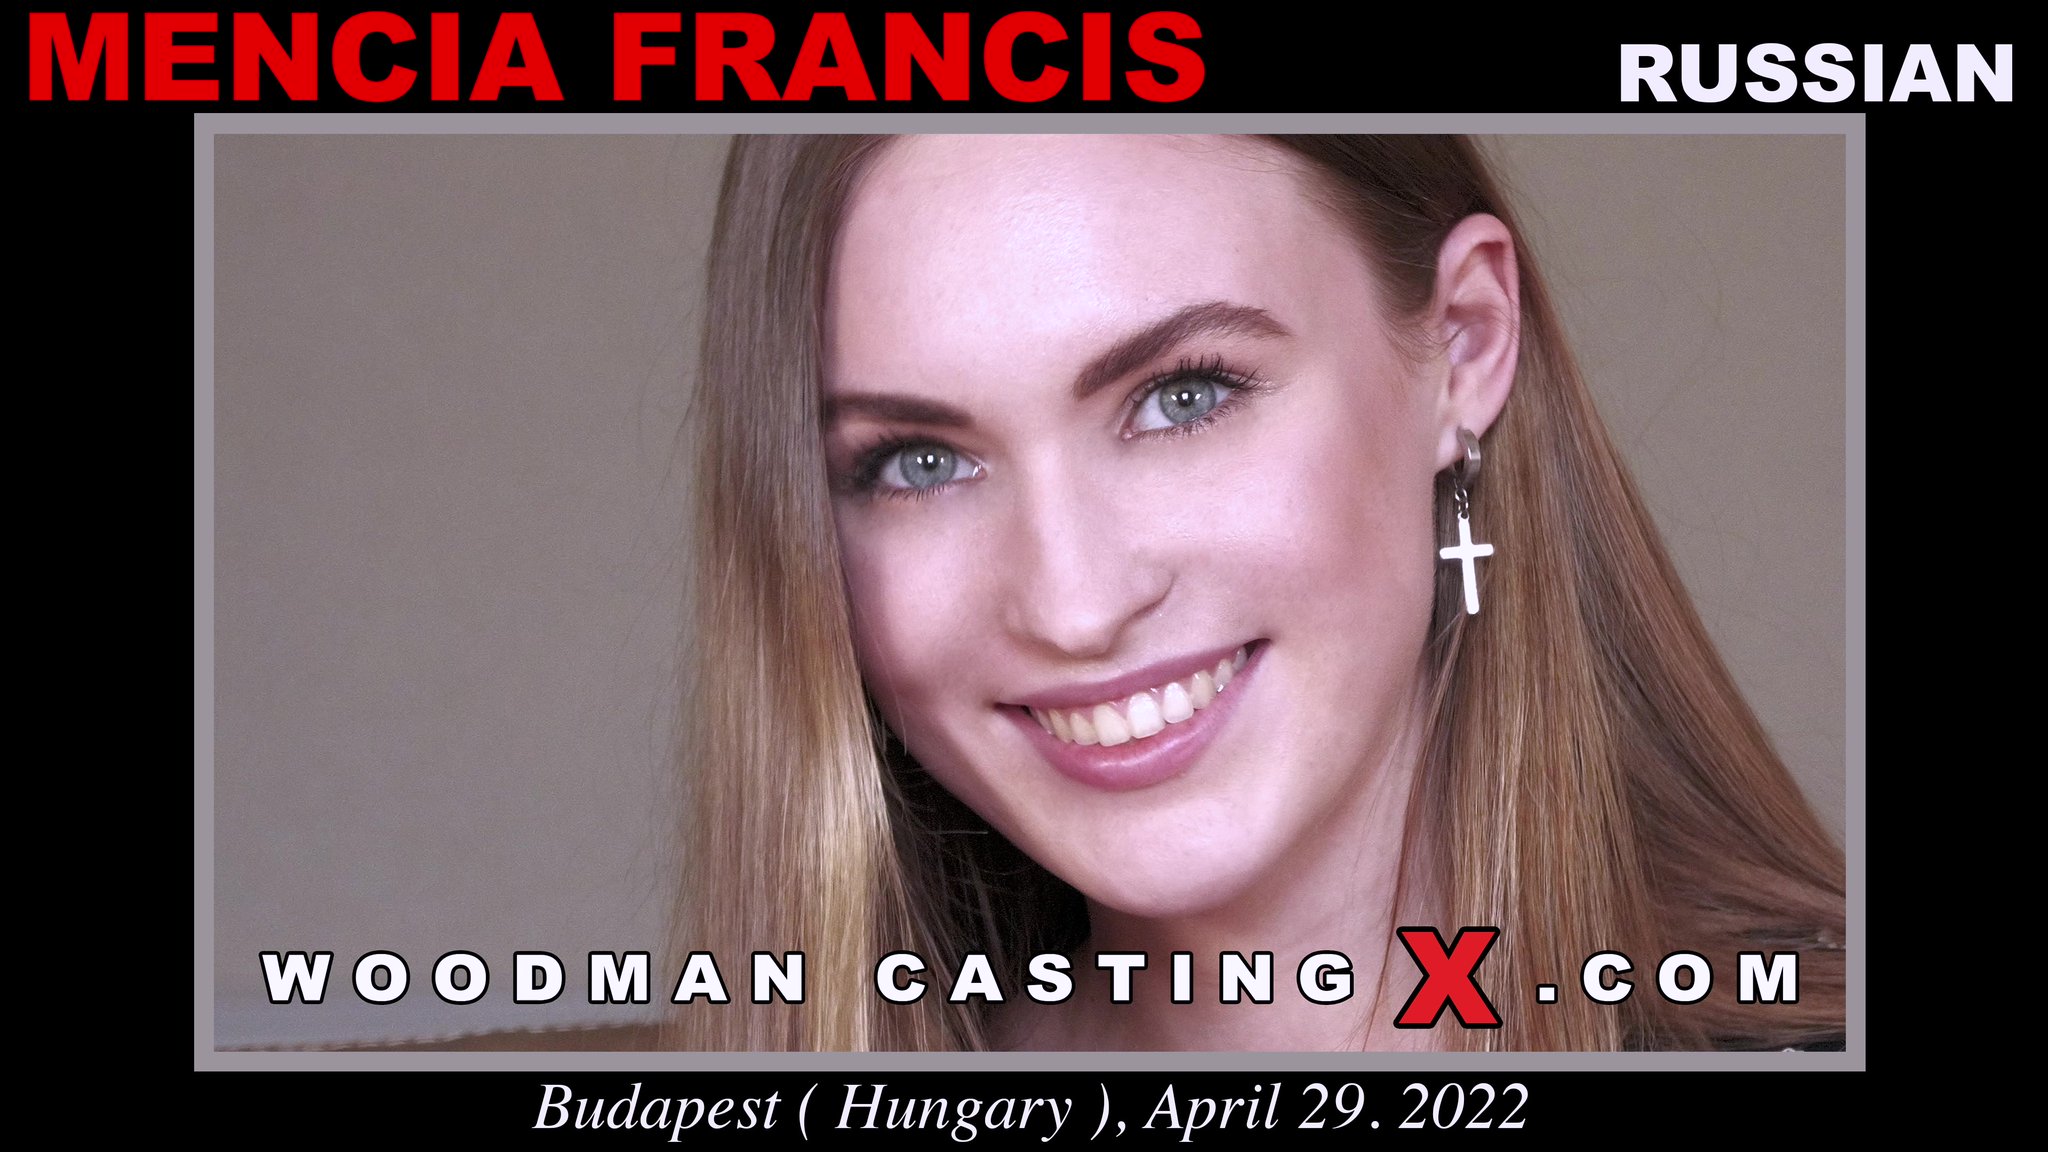 Tw Pornstars Woodman Casting X Twitter New Video Mencia Francis 1110 Am 1 May 2022